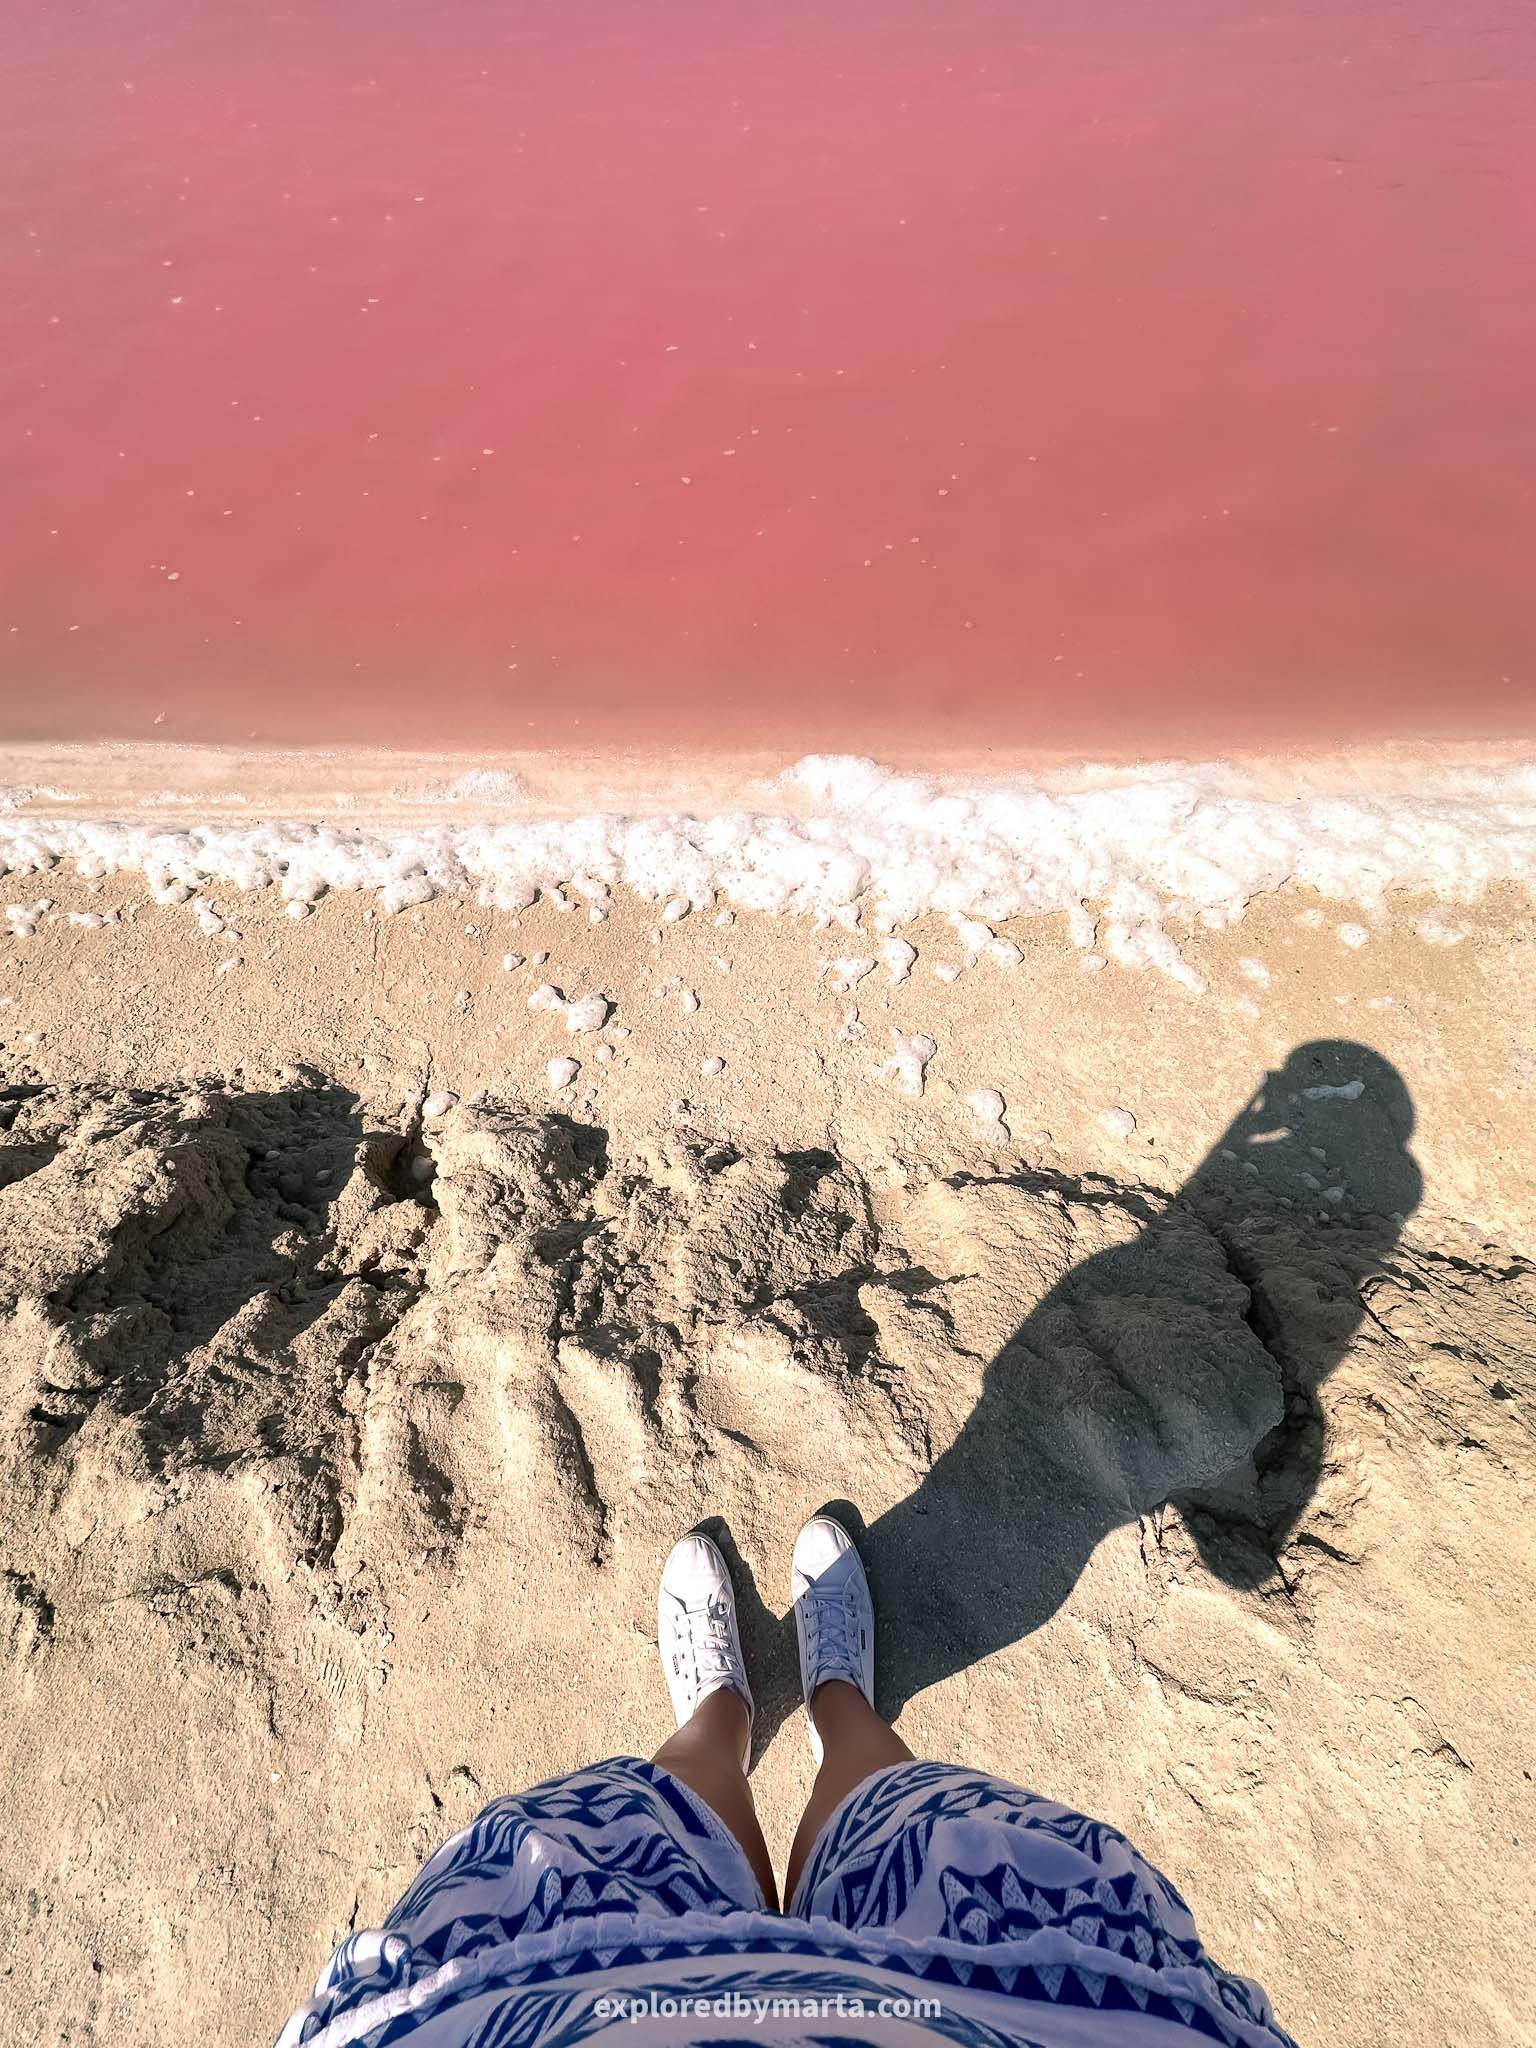 Pink salt lakes at Las Coloradas in Yucatan peninsula, Mexico